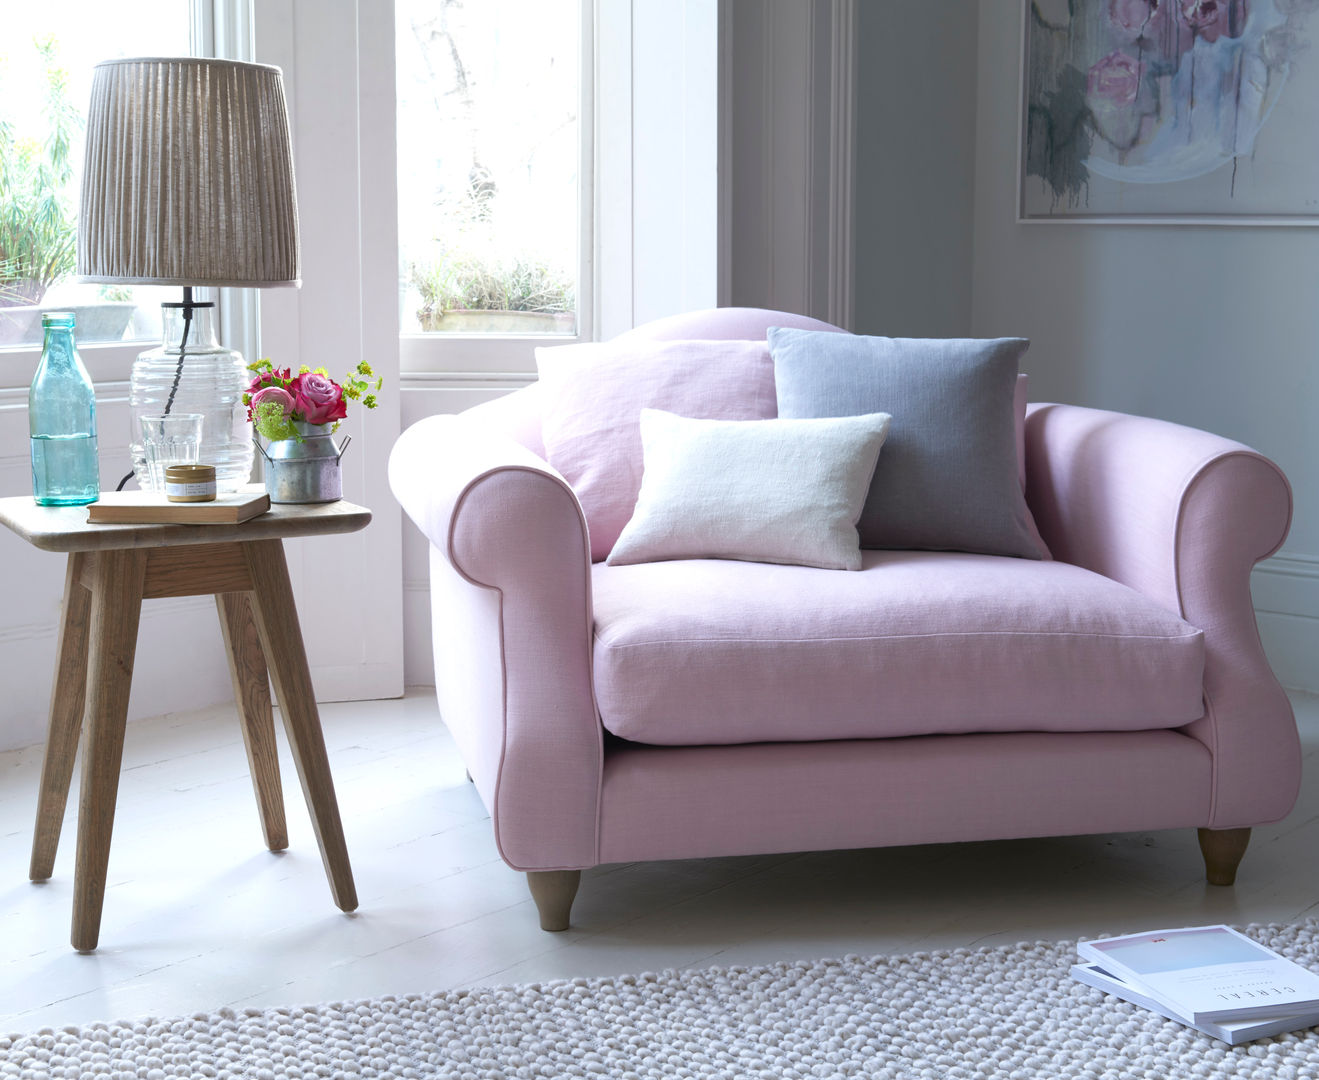 Sloucher love seat in Pale Rose vintage linen Loaf Ruang Keluarga Klasik Flax/Linen Pink Sofas & armchairs